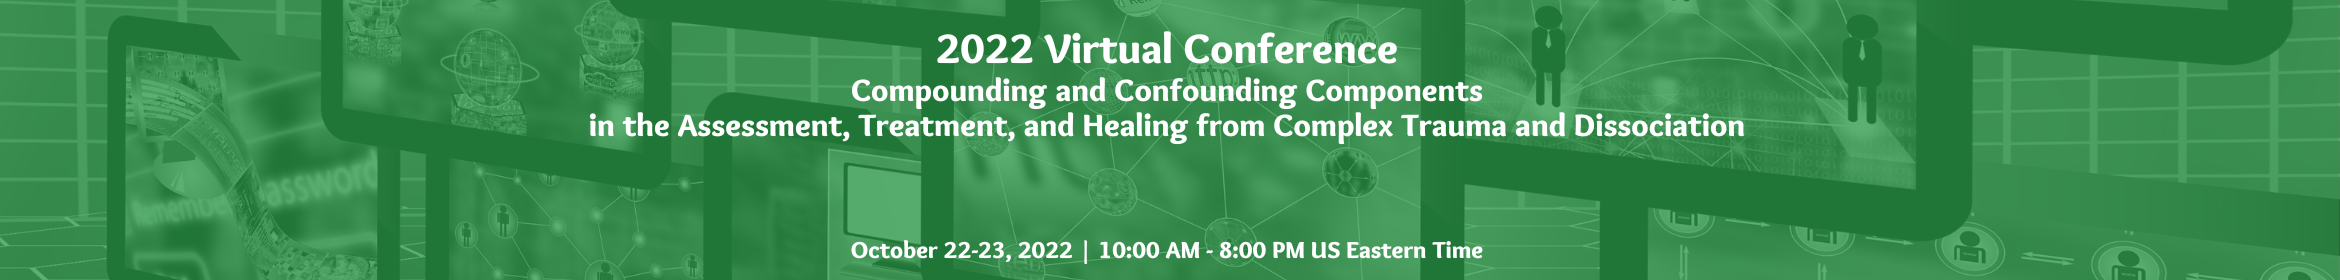 2022 Fall Virtual Conference Main banner